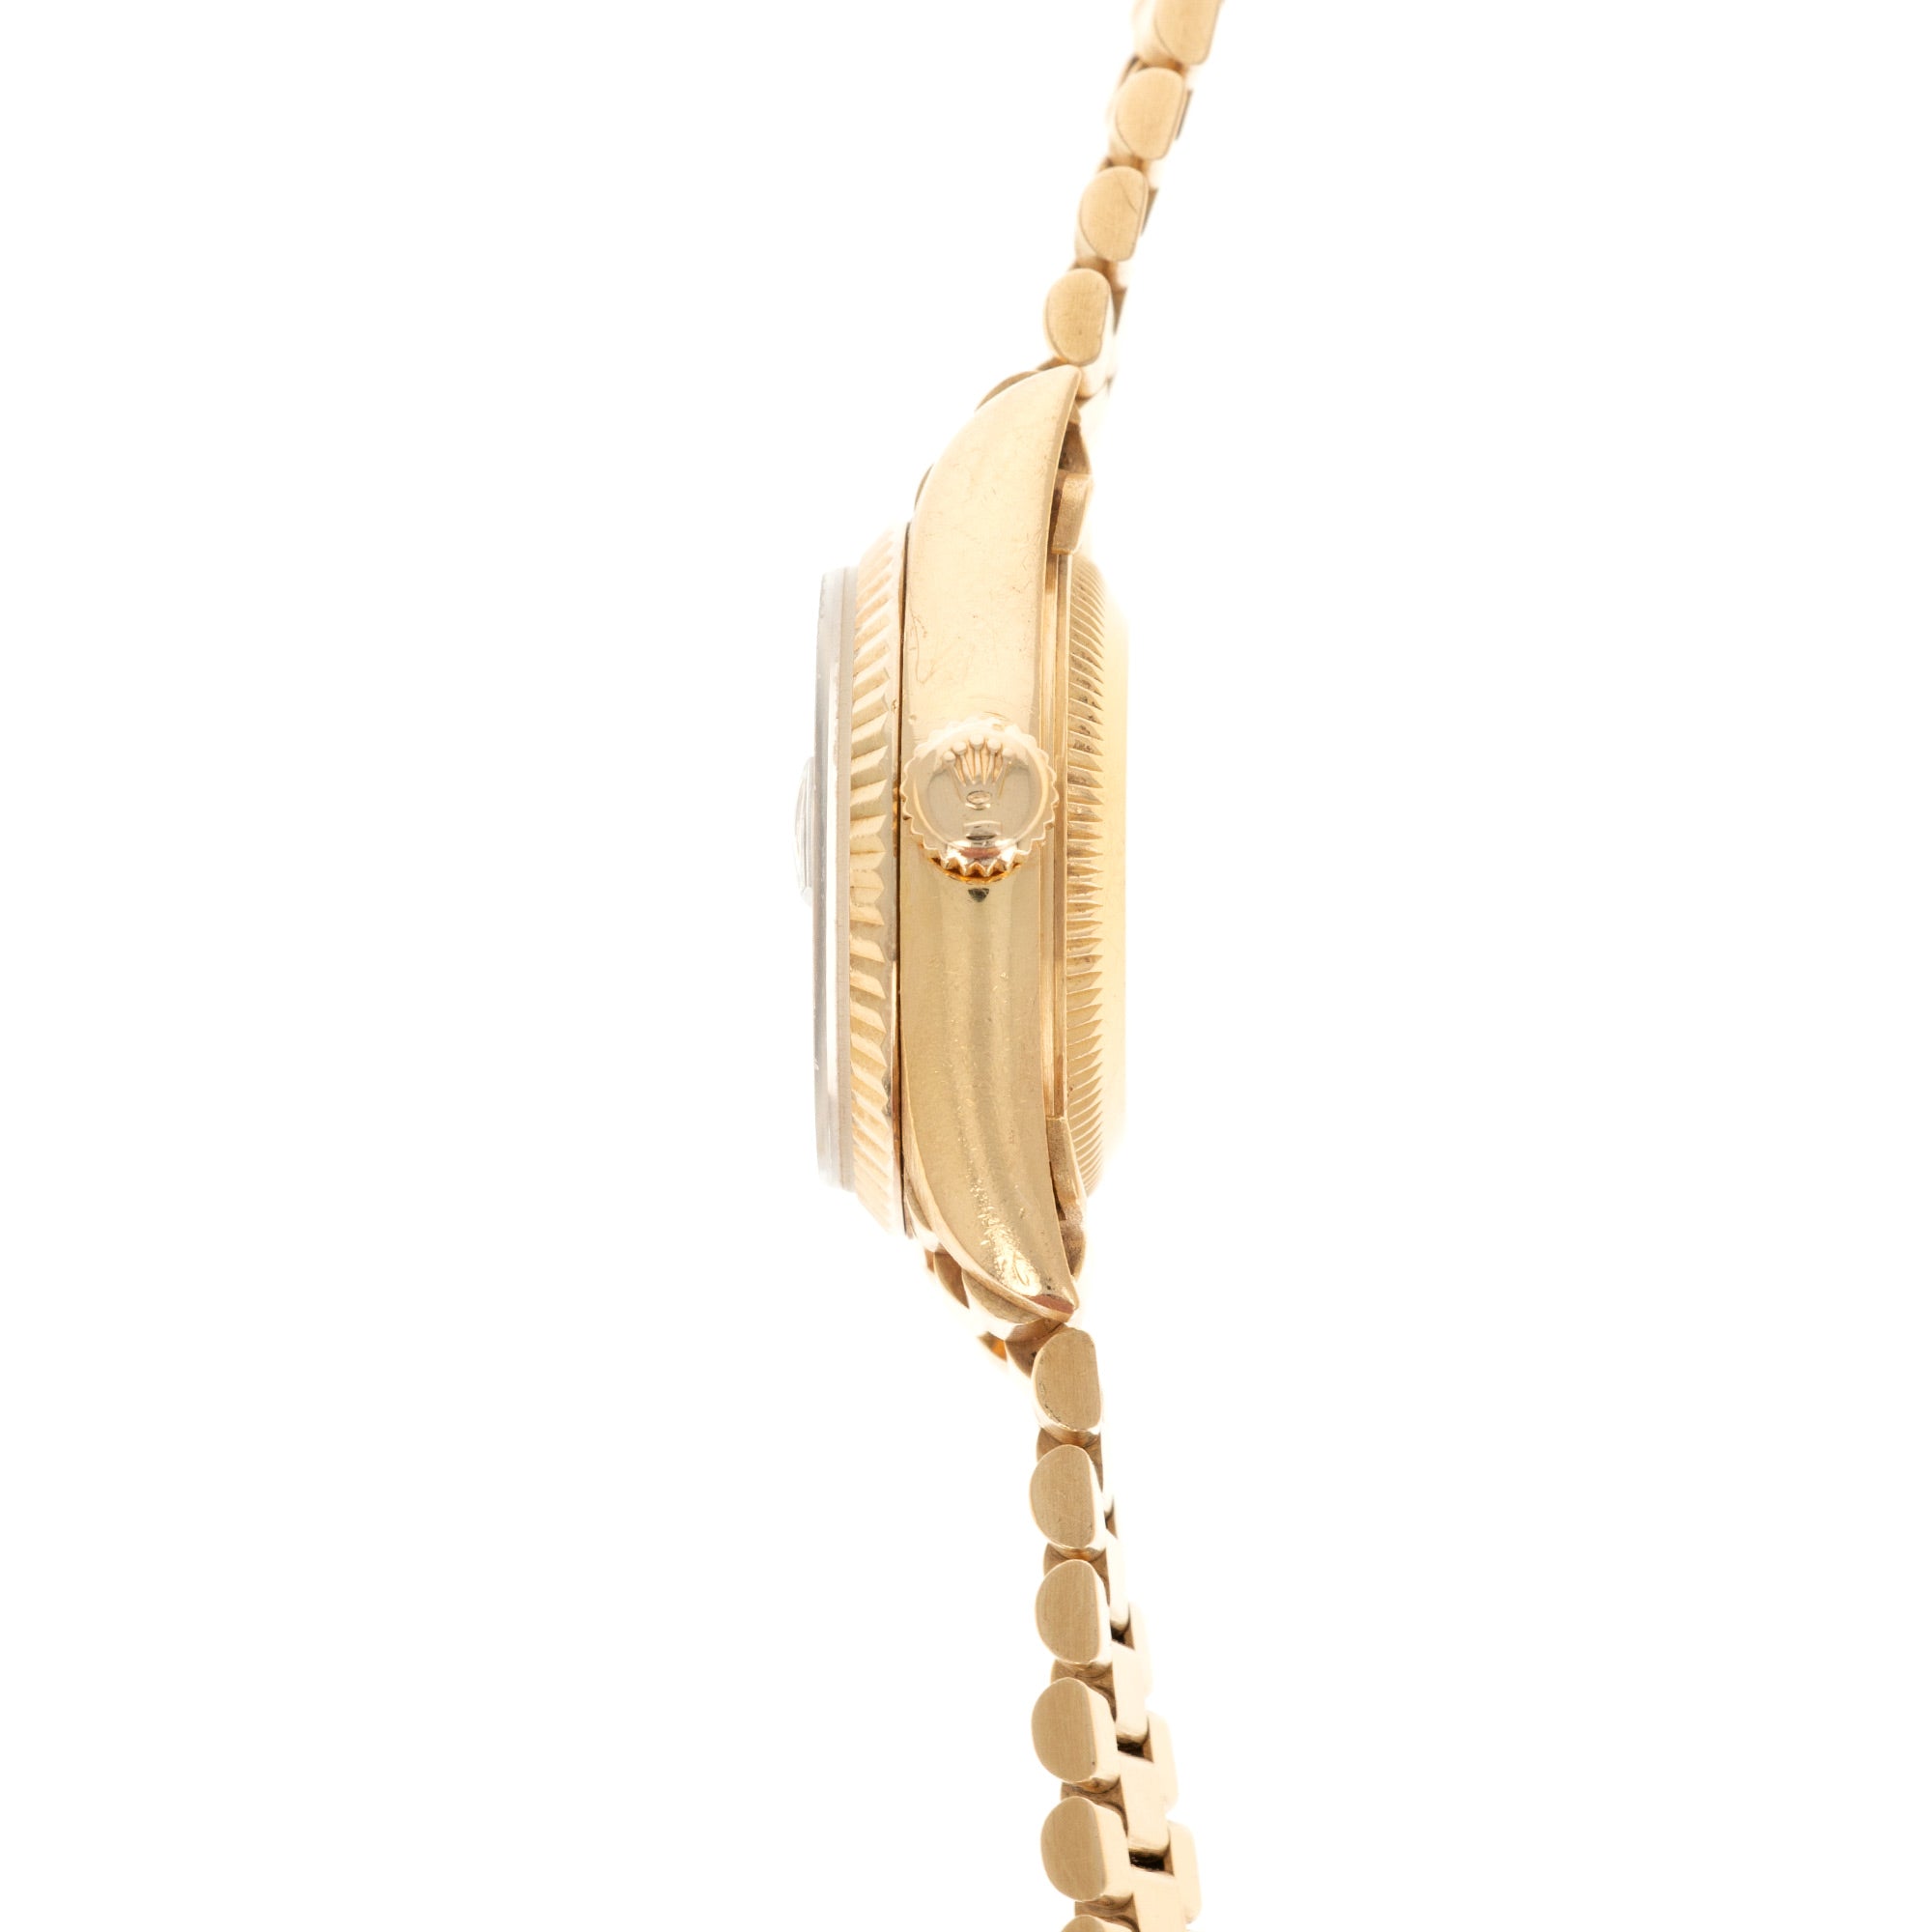 Rolex - Rolex ladies Datejust Yellow Gold Ref. 69178 - The Keystone Watches